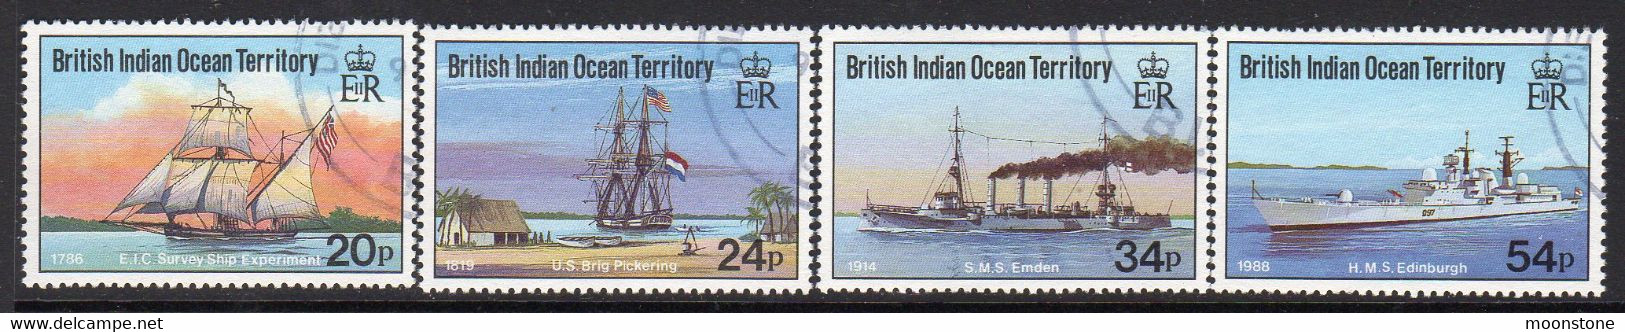 British Indian Ocean Territory BIOT 1991 Visiting Ships Set Of 4, Used, SG 115/8 (A) - Territoire Britannique De L'Océan Indien